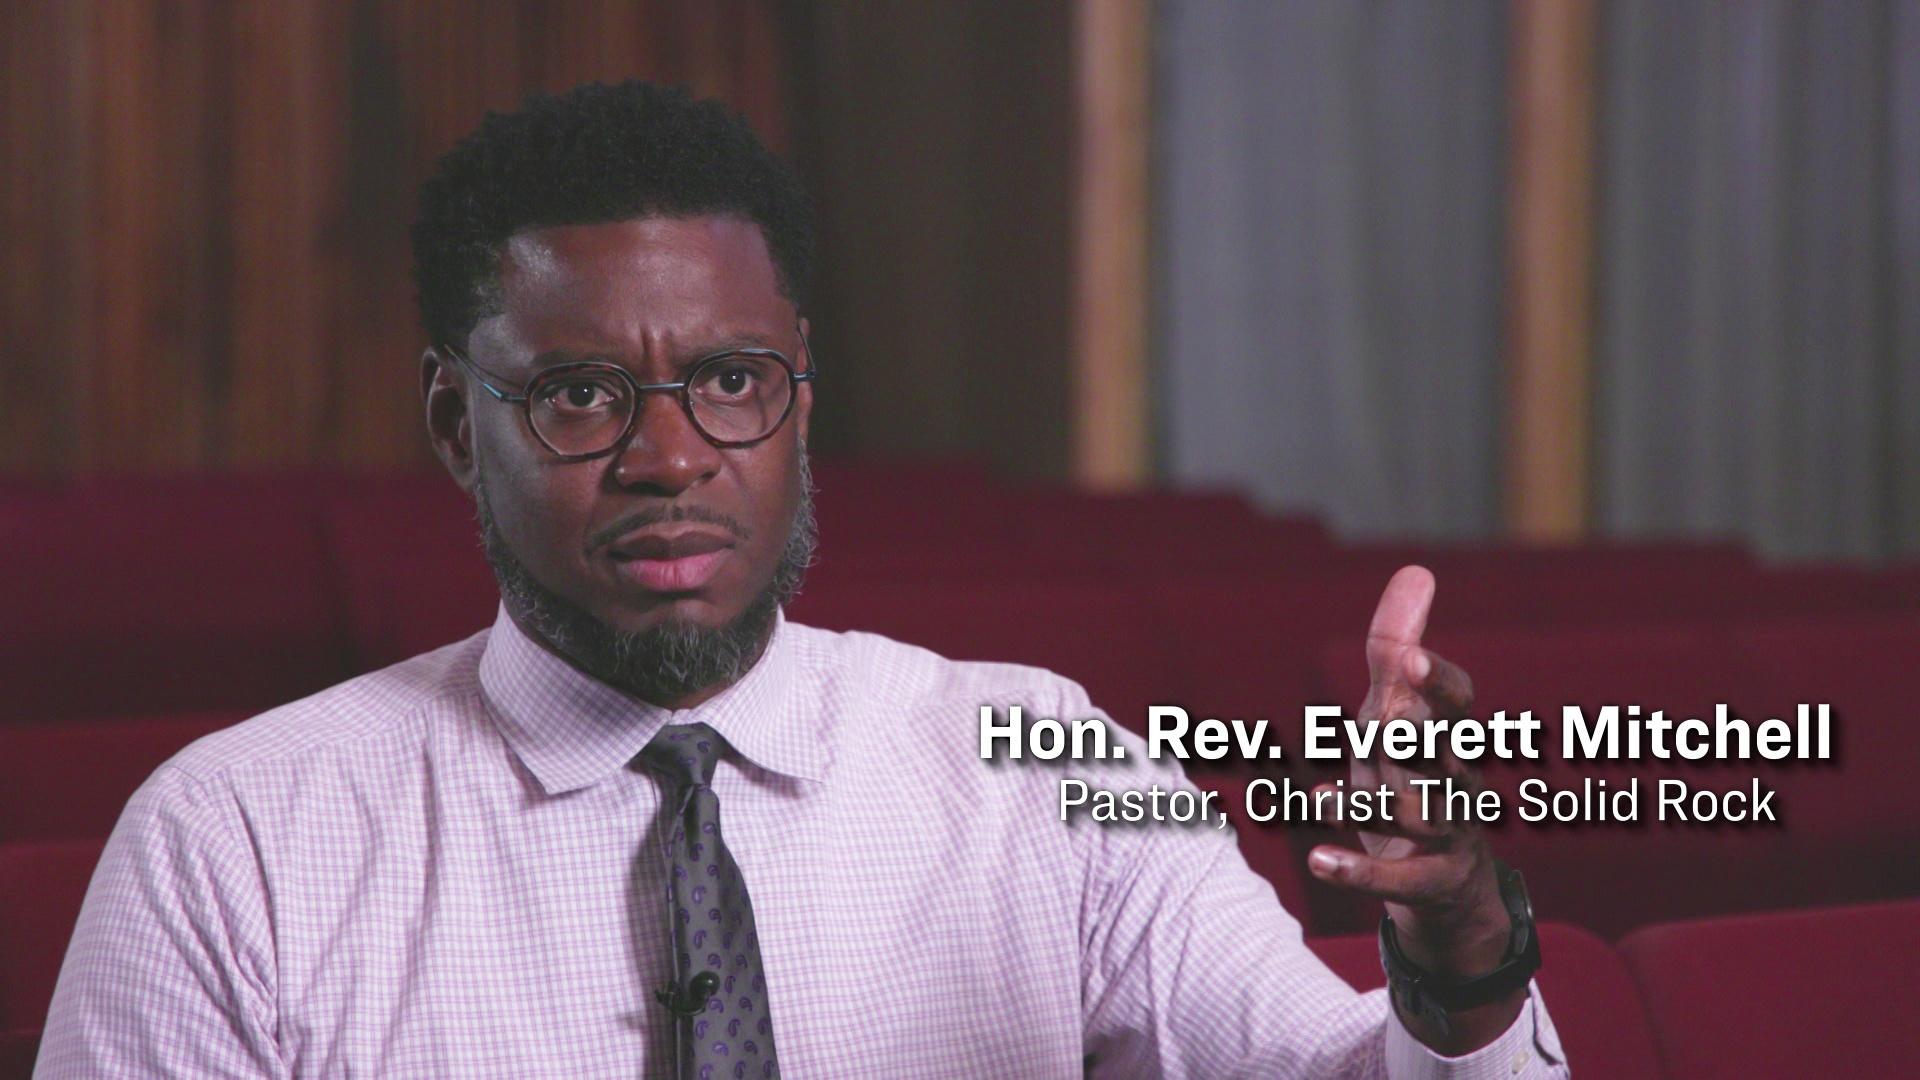 Hon. Rev. Everett Mitchell on Black communities and church